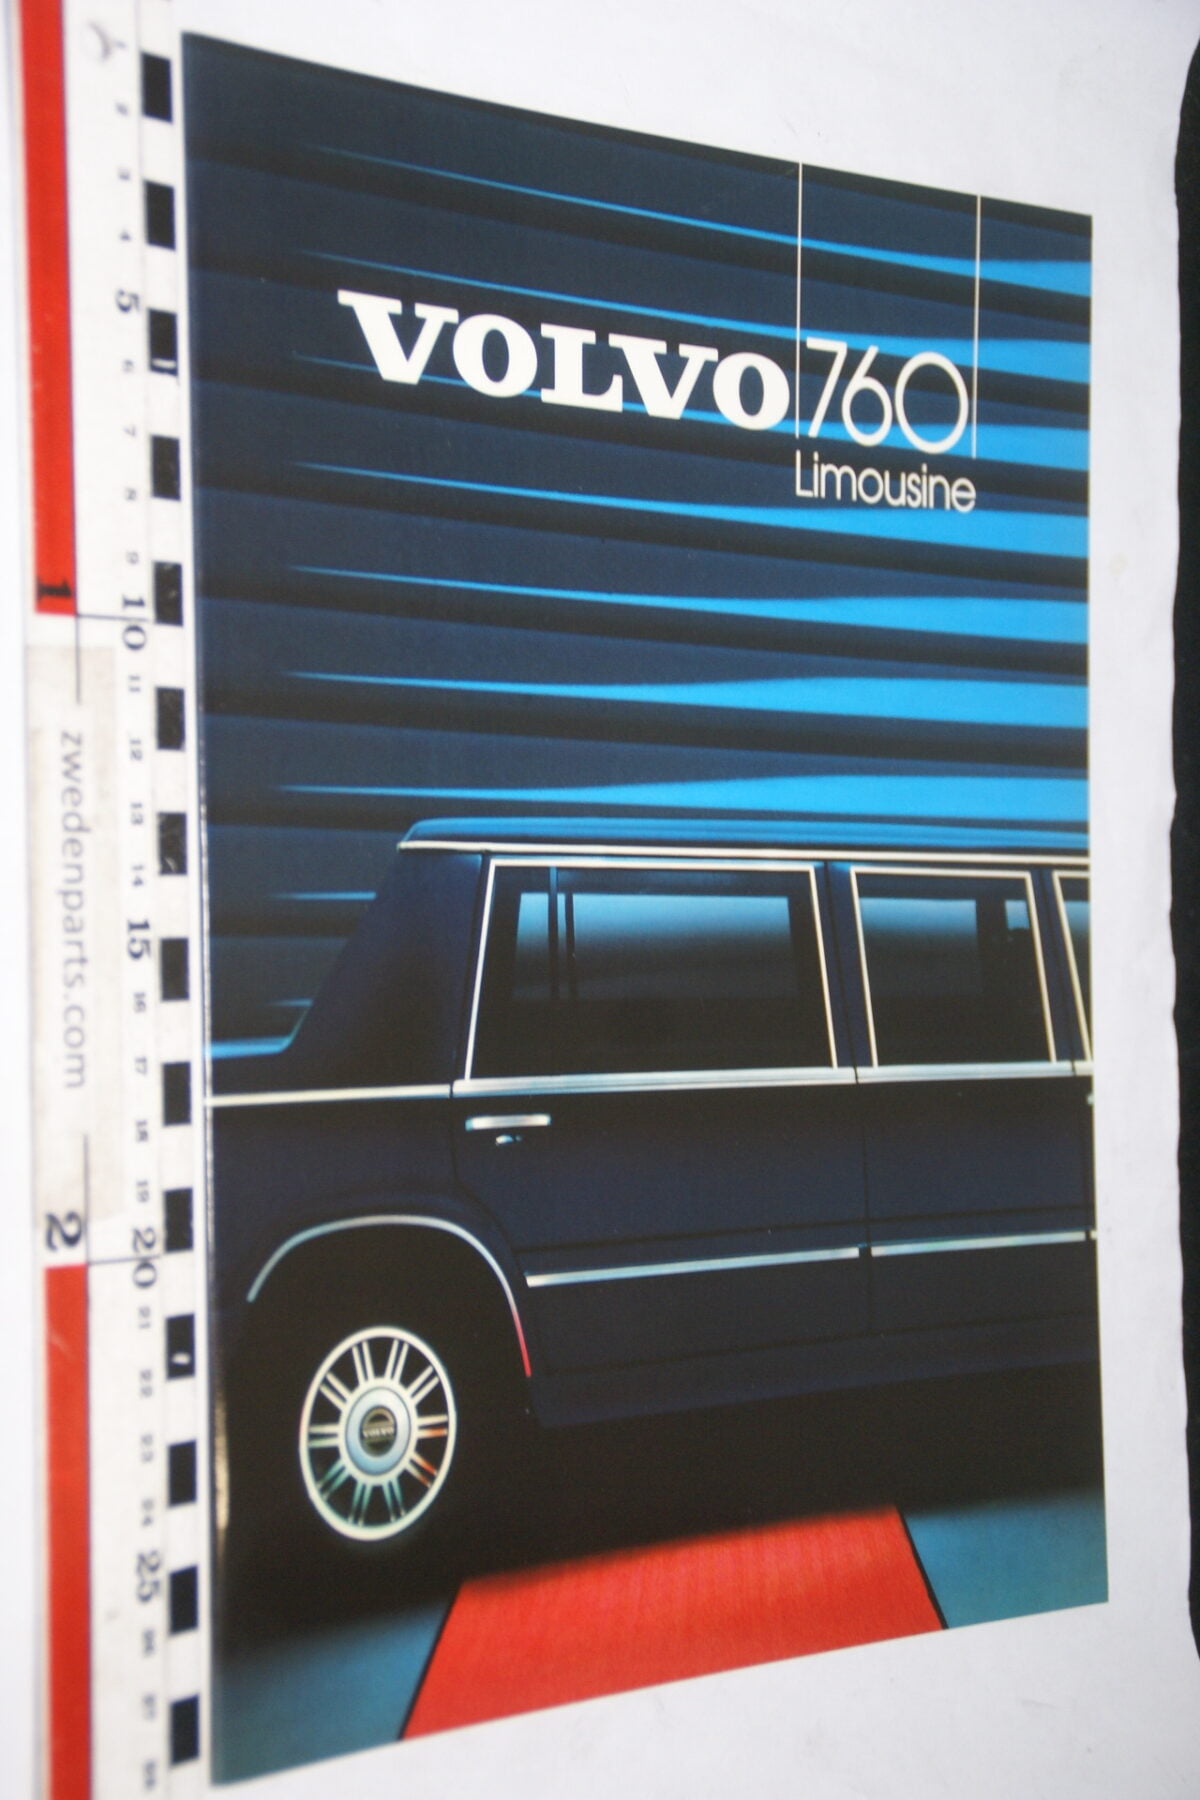 DSC02844 1986 originele brochure Volvo 760 Limousine, nr VBPV 146-86, MSPV1736 English-e9966eaf